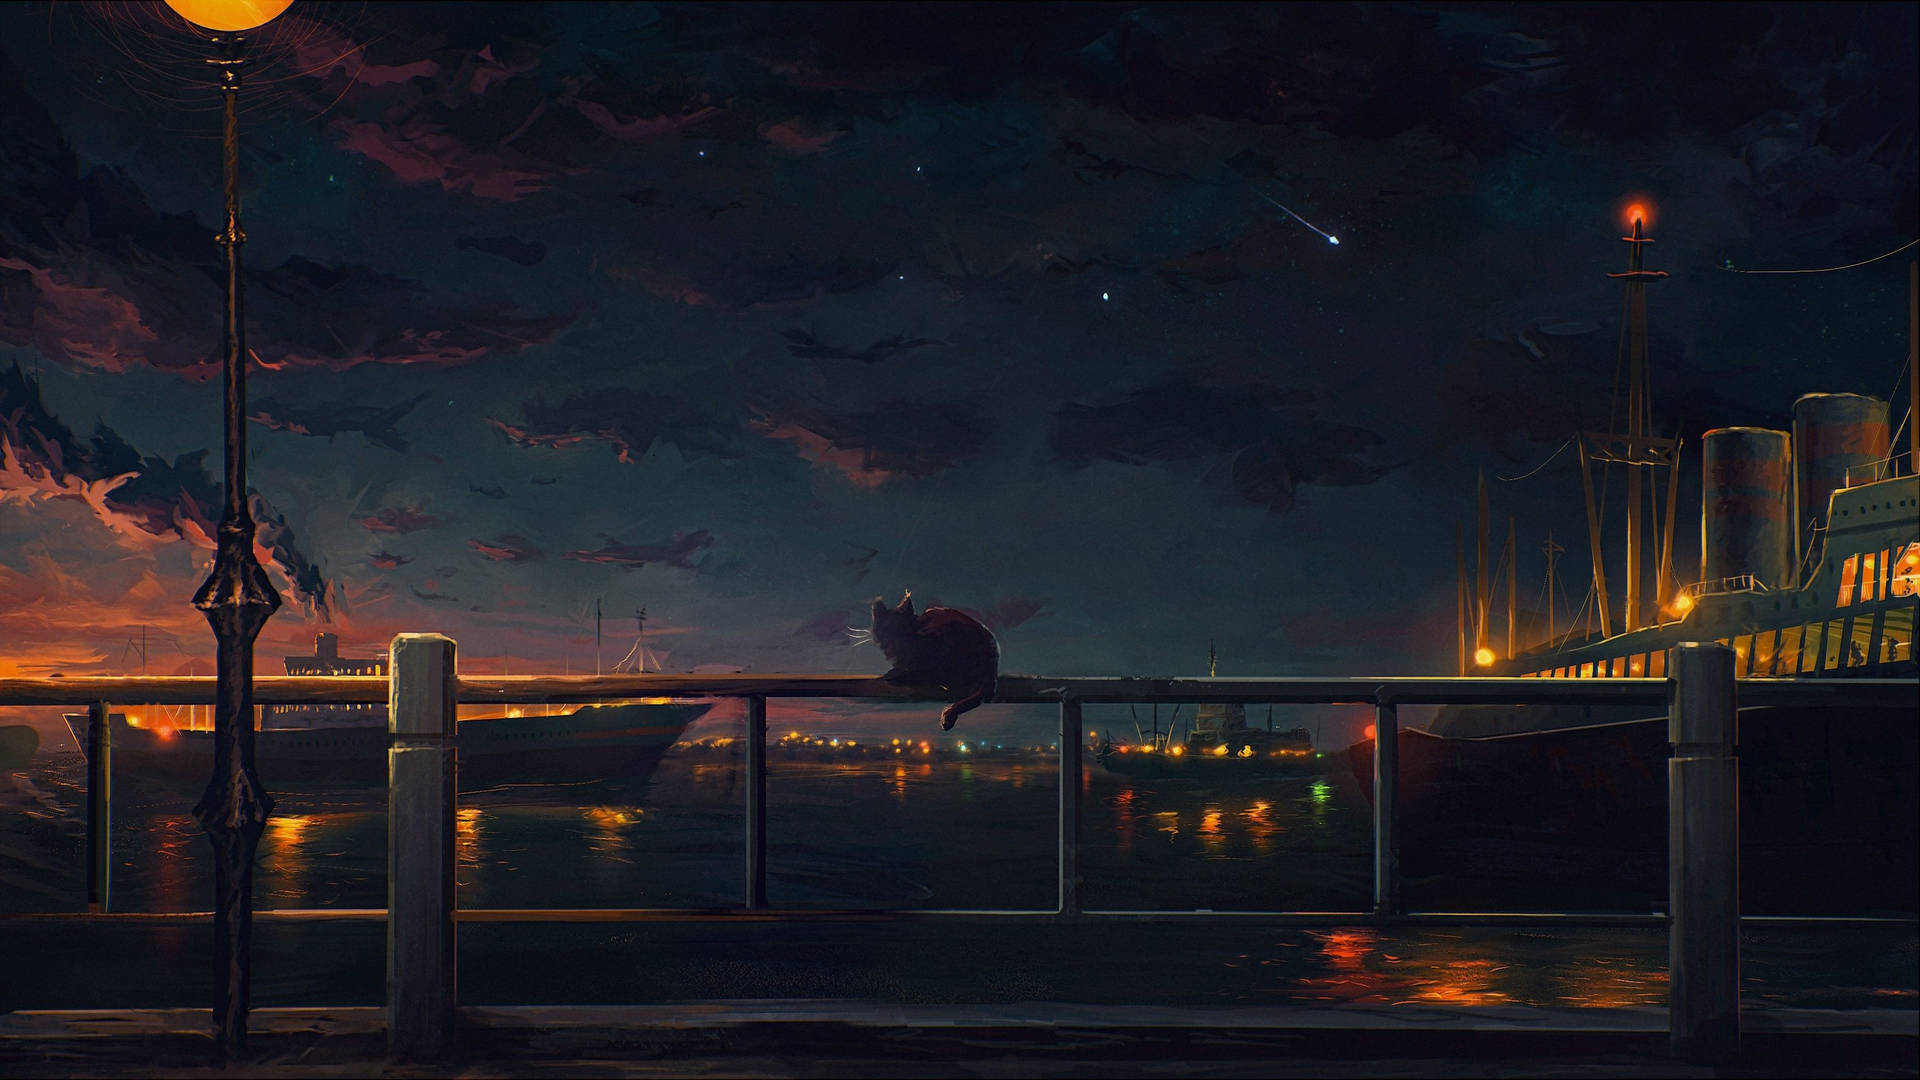 Anime City Ocean Night View Wallpaper